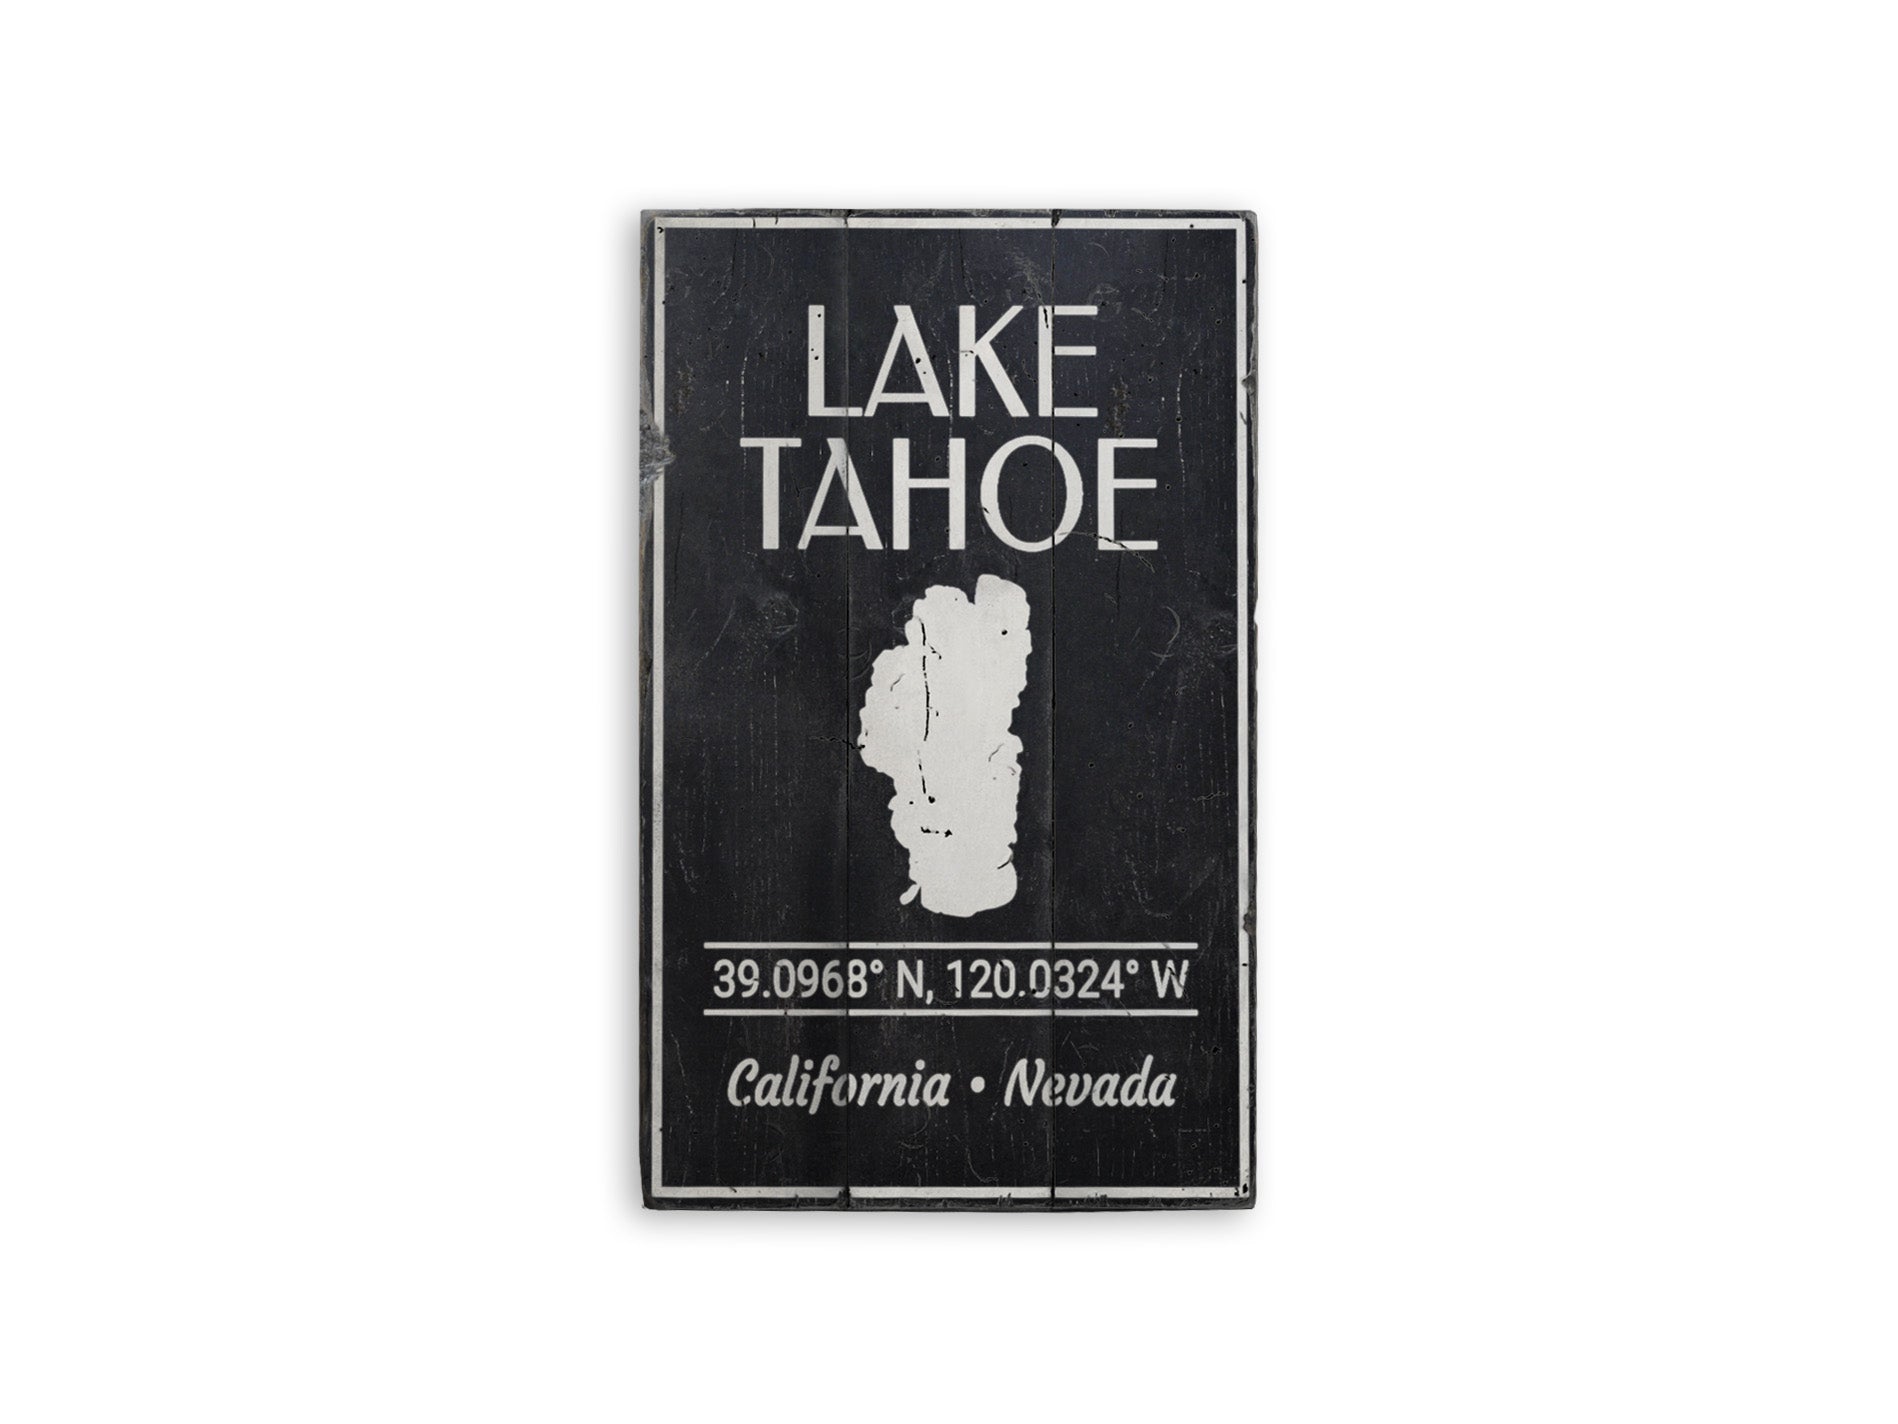 Lake Tahoe Location Rustic Wood Sign